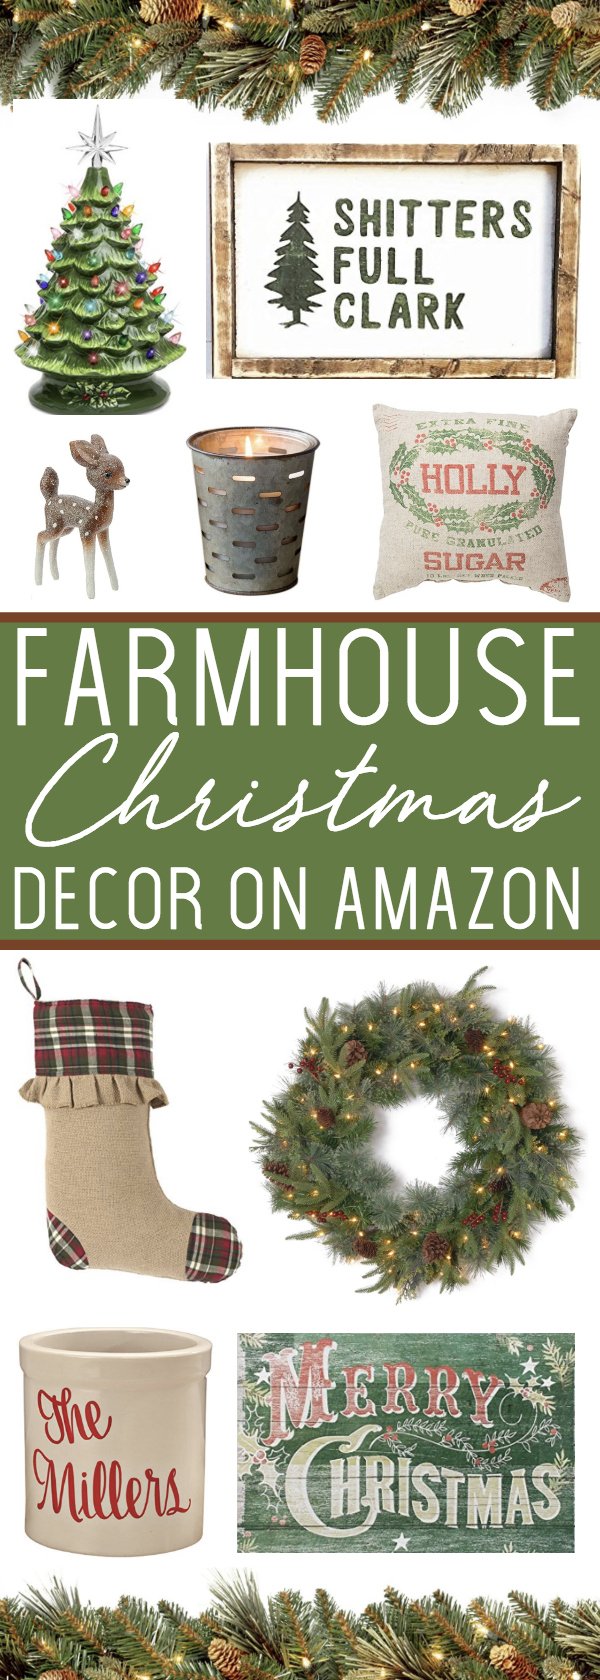 Farmhouse Christmas Decor on Amazon